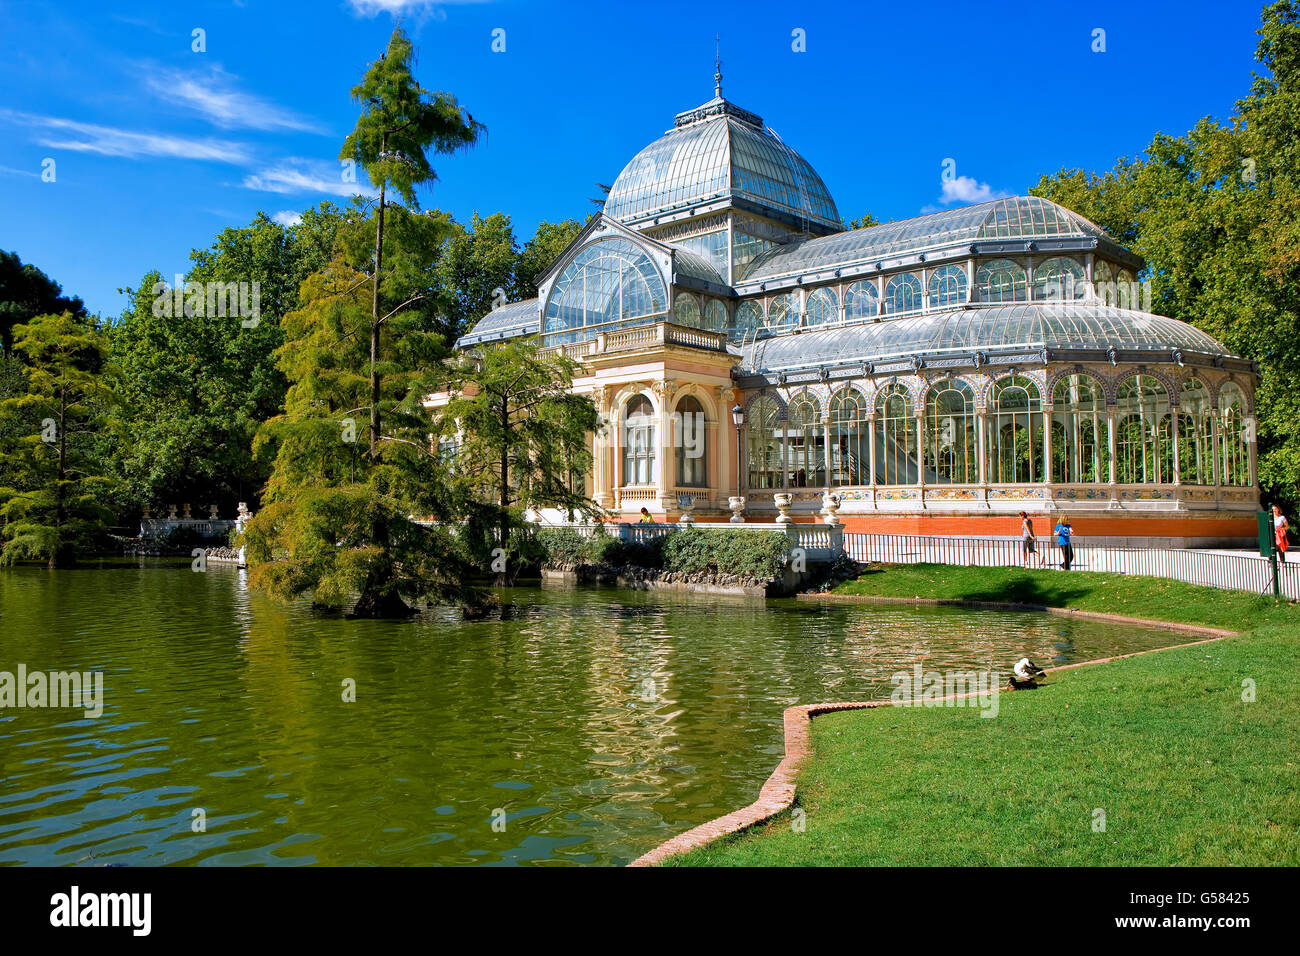 Palacio de Cristal in Parque del Buen Retiro, Madrid Stock Photo